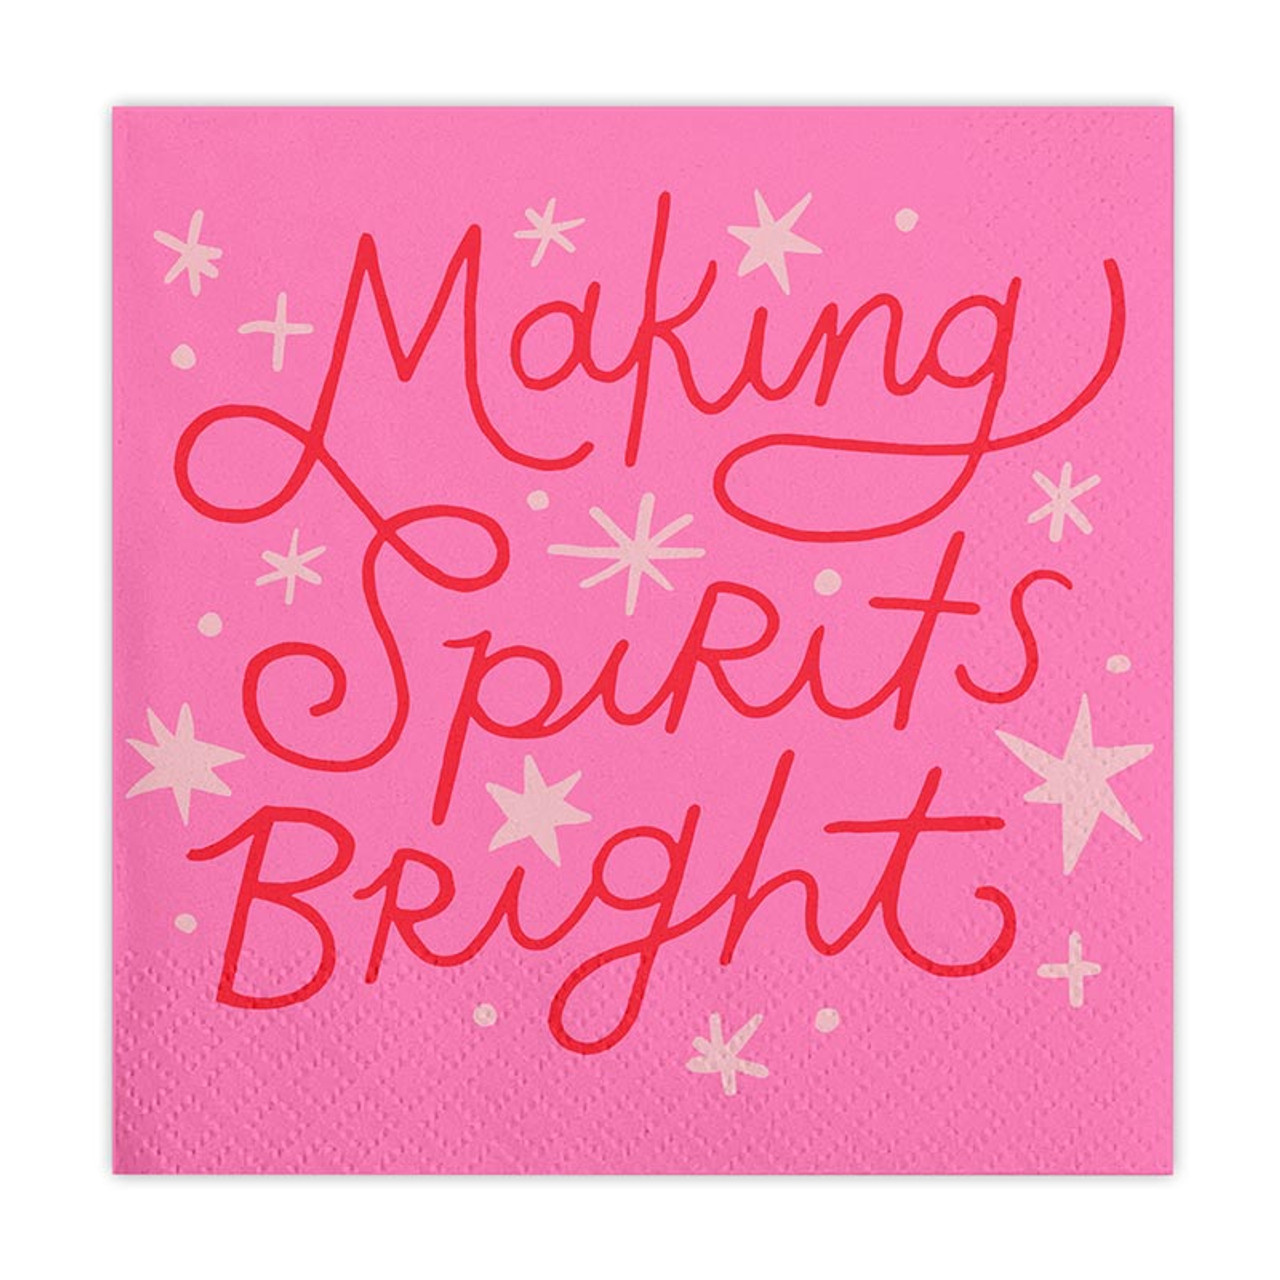 Making Spirits Bright